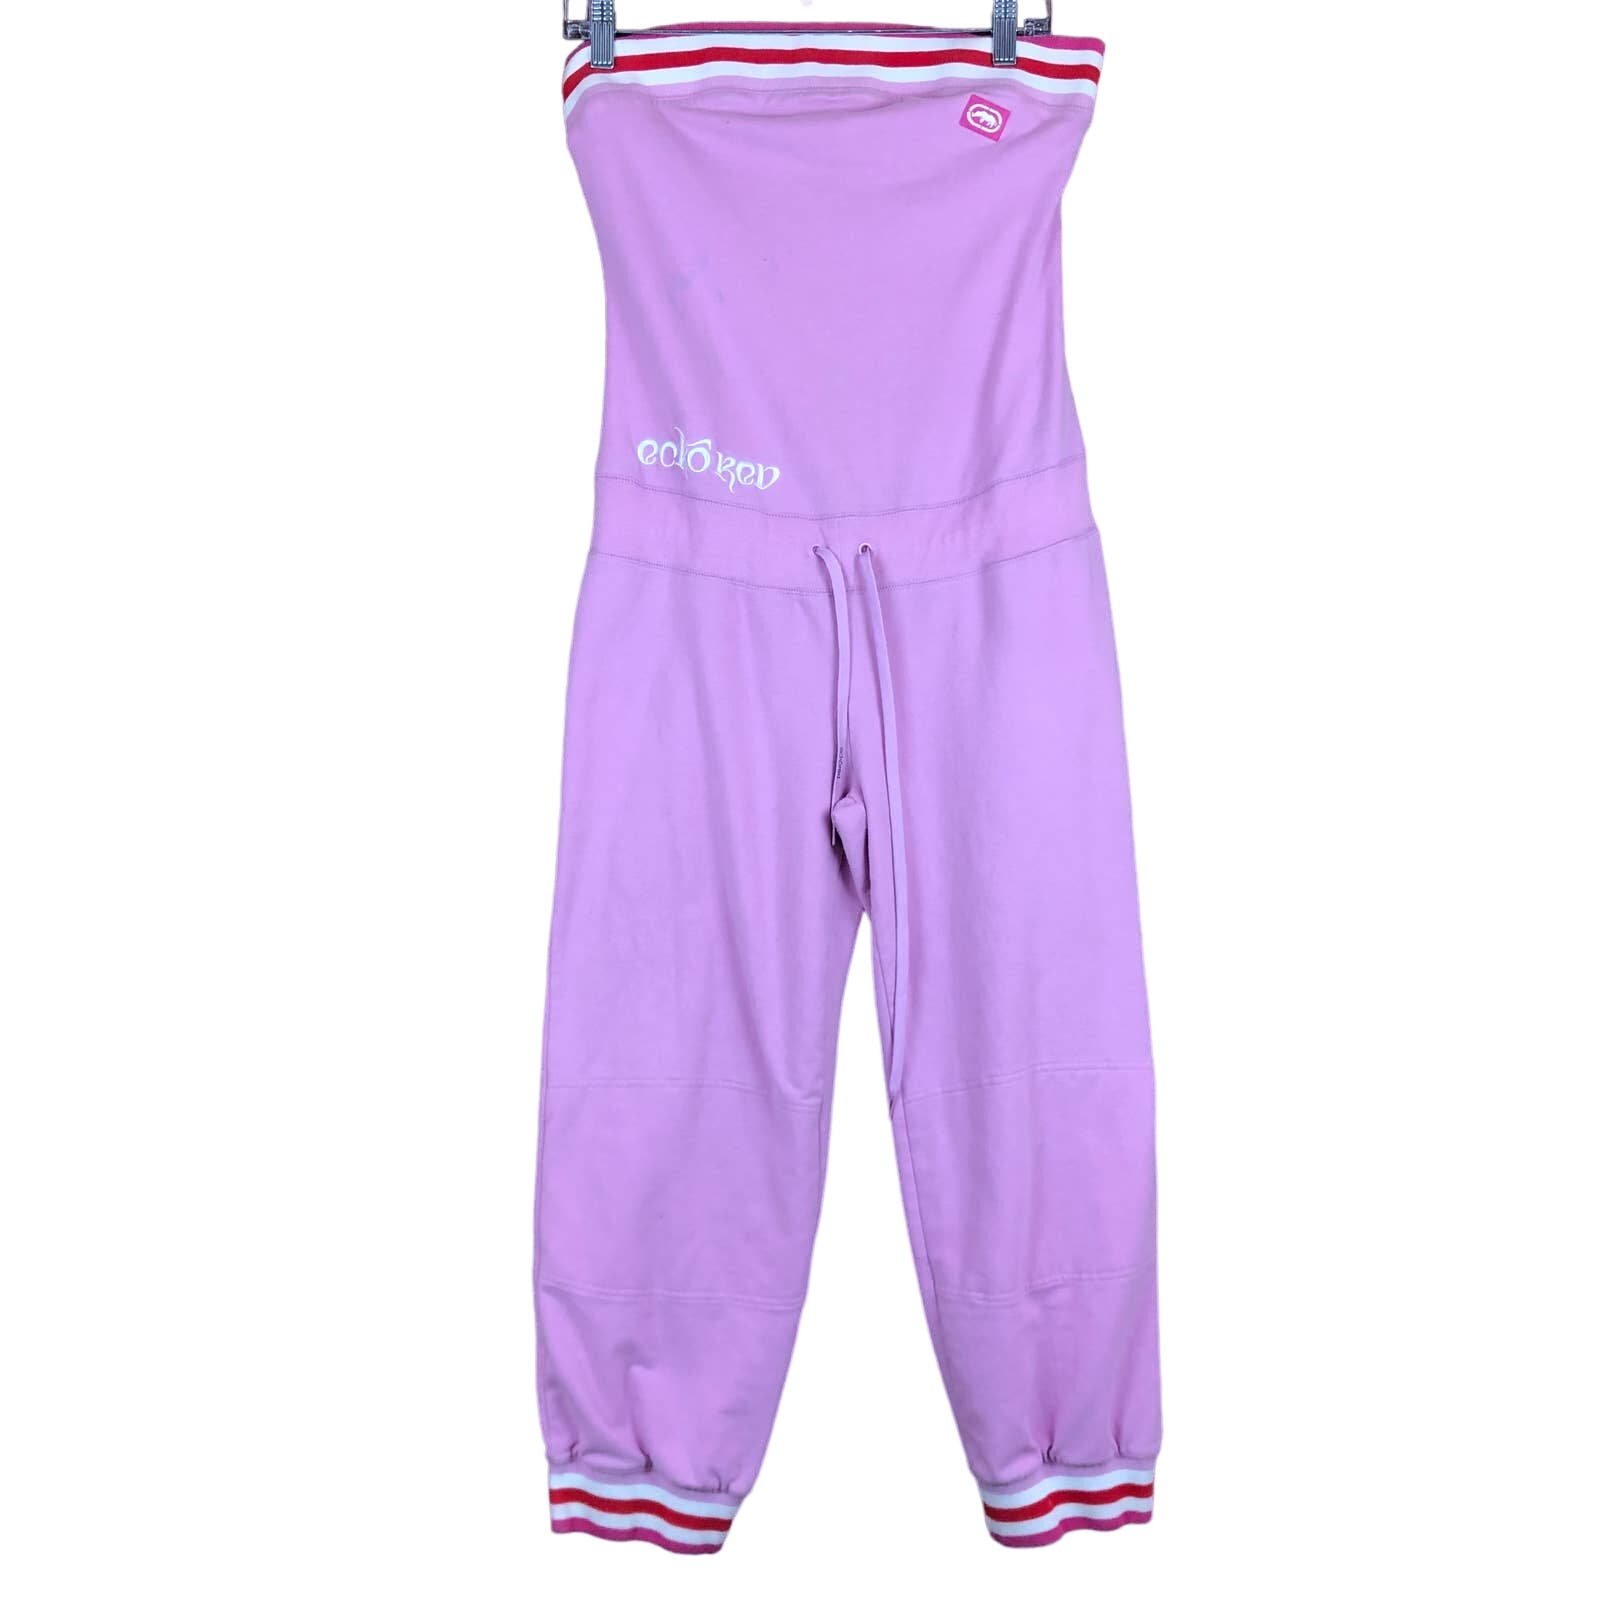 save up to 70% Vintage Ecko Red Womens Romper Pink Tube Top Jumpsuit Y2K Streetwear Stretch L k05BaZp7O on sale